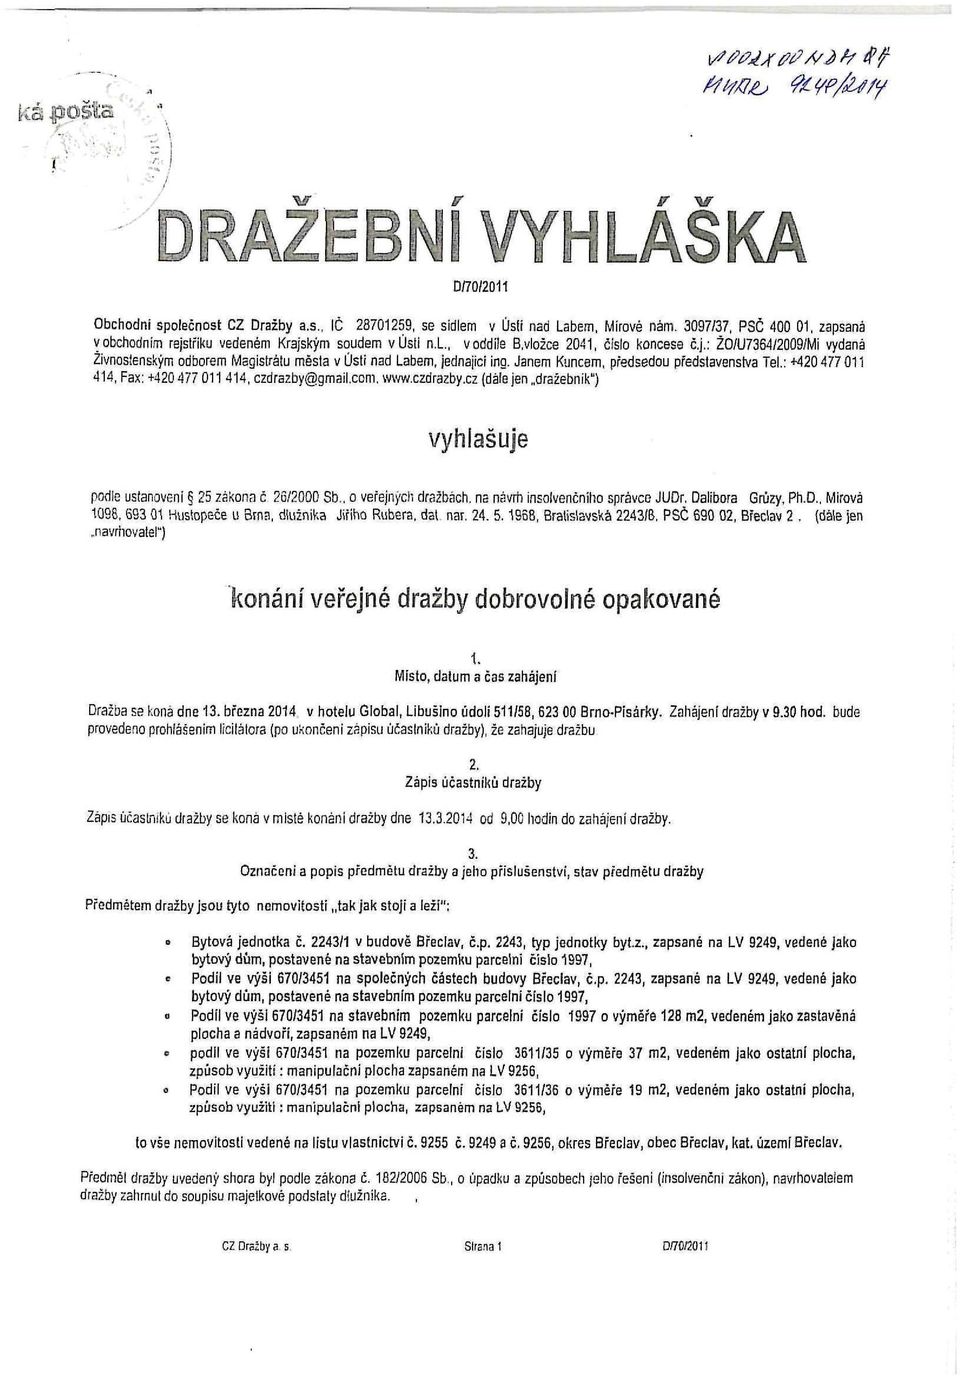 : +420 477 011 414, Fax: +420 477 011 414, czdrazby@gmail.com. www.czdrazby.cz (dále jen dražebnik") vyhlašuje podle ustanoveni 25 zákona č 26/2000 Sb.